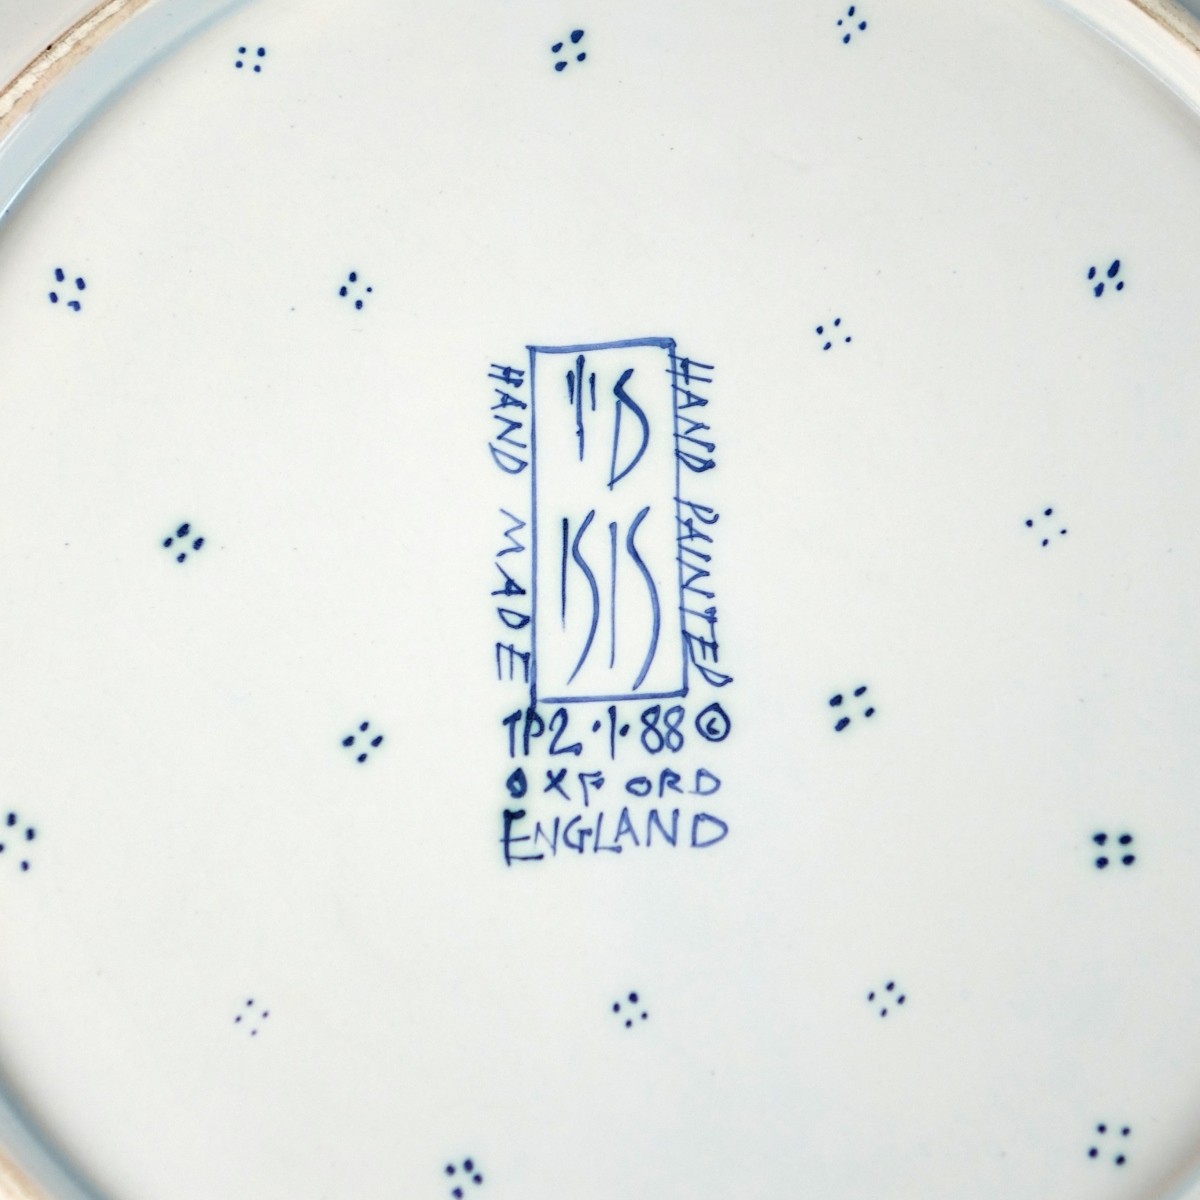 Isis Ceramics Porcelain Charger